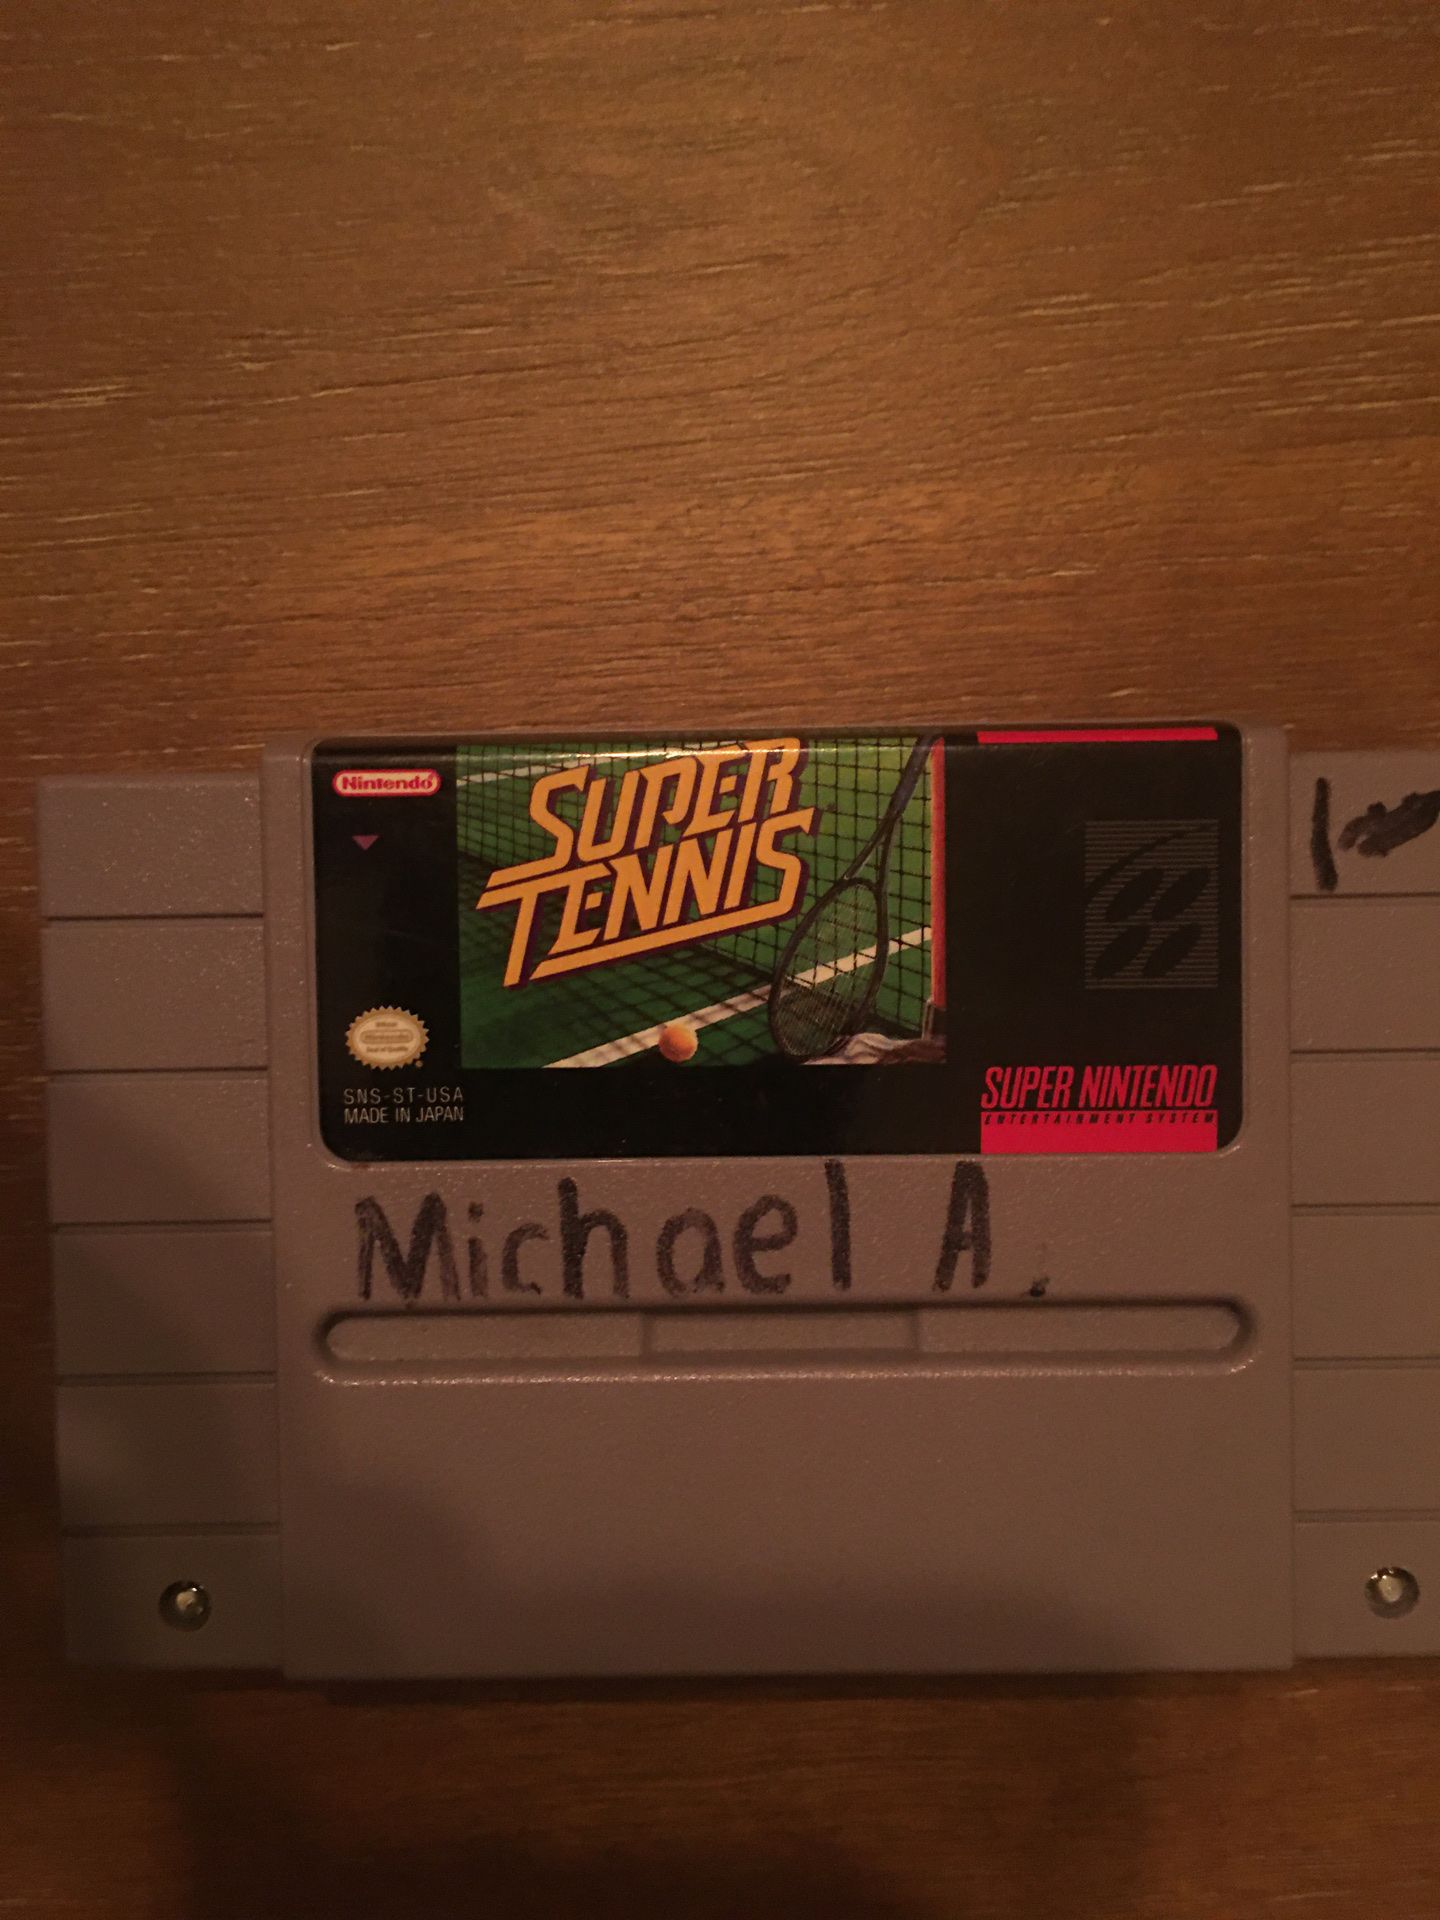 Super Nintendo tennis